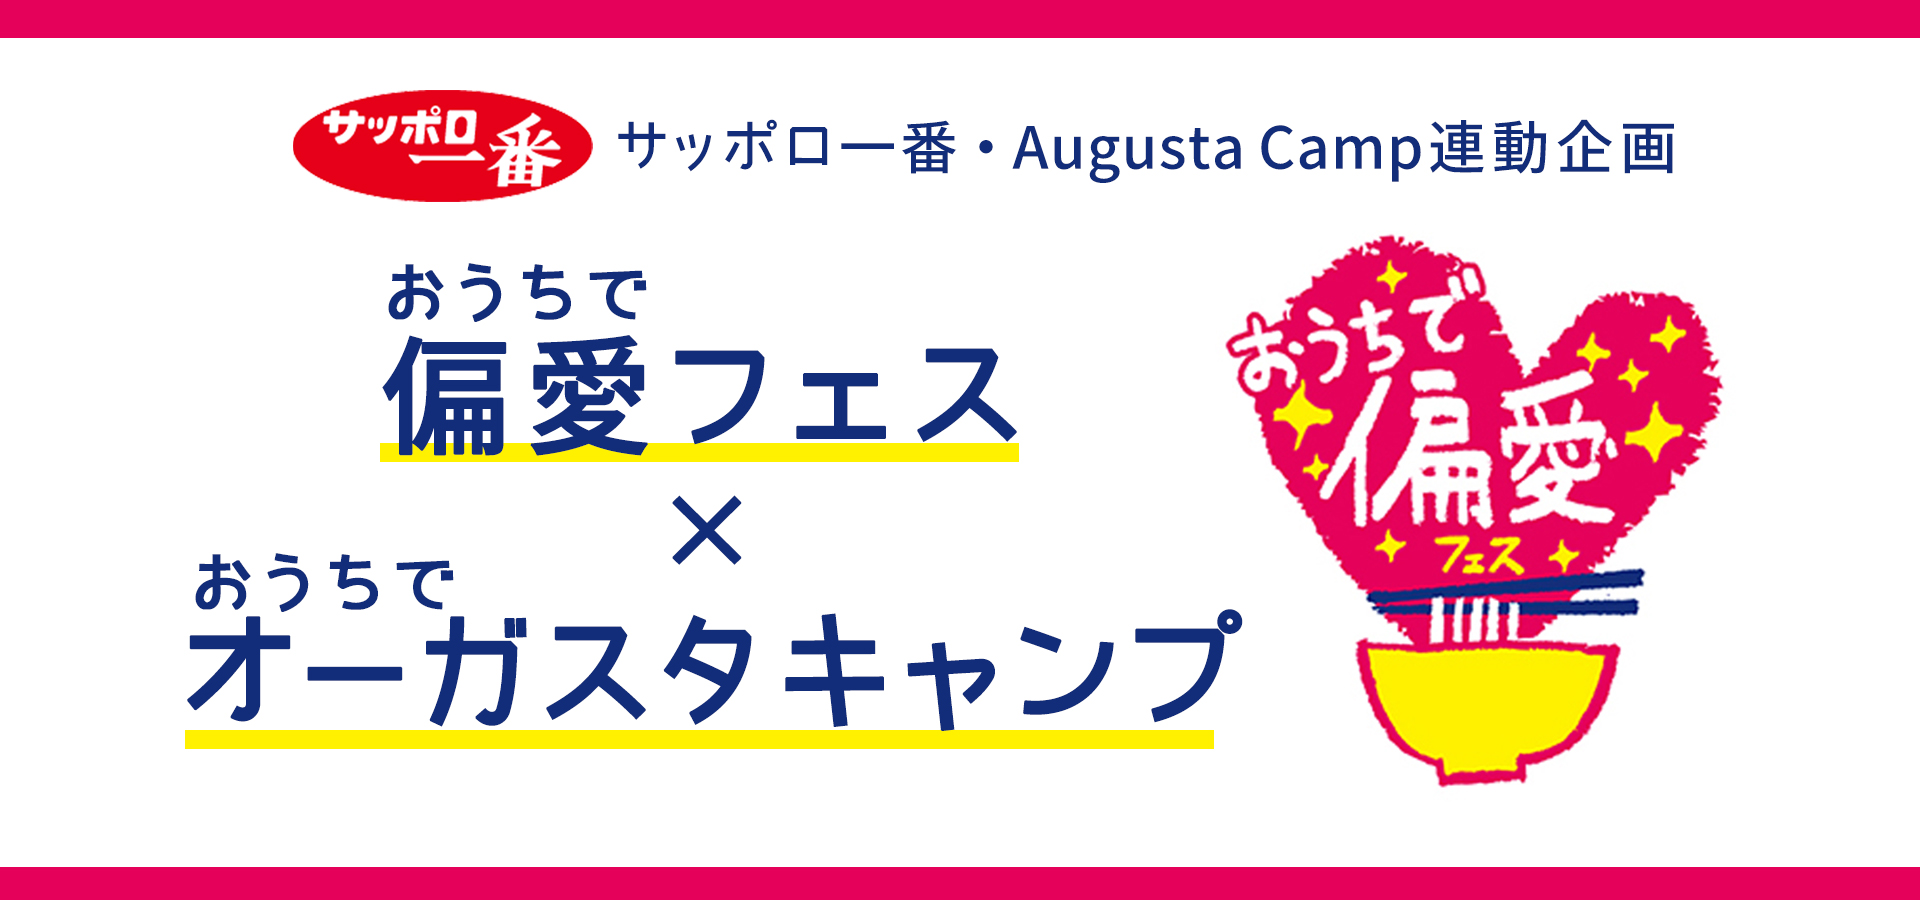 Sapporo Ichiban x Augusta Camp interlocking plan "Home love festival x Home Augusta camp"